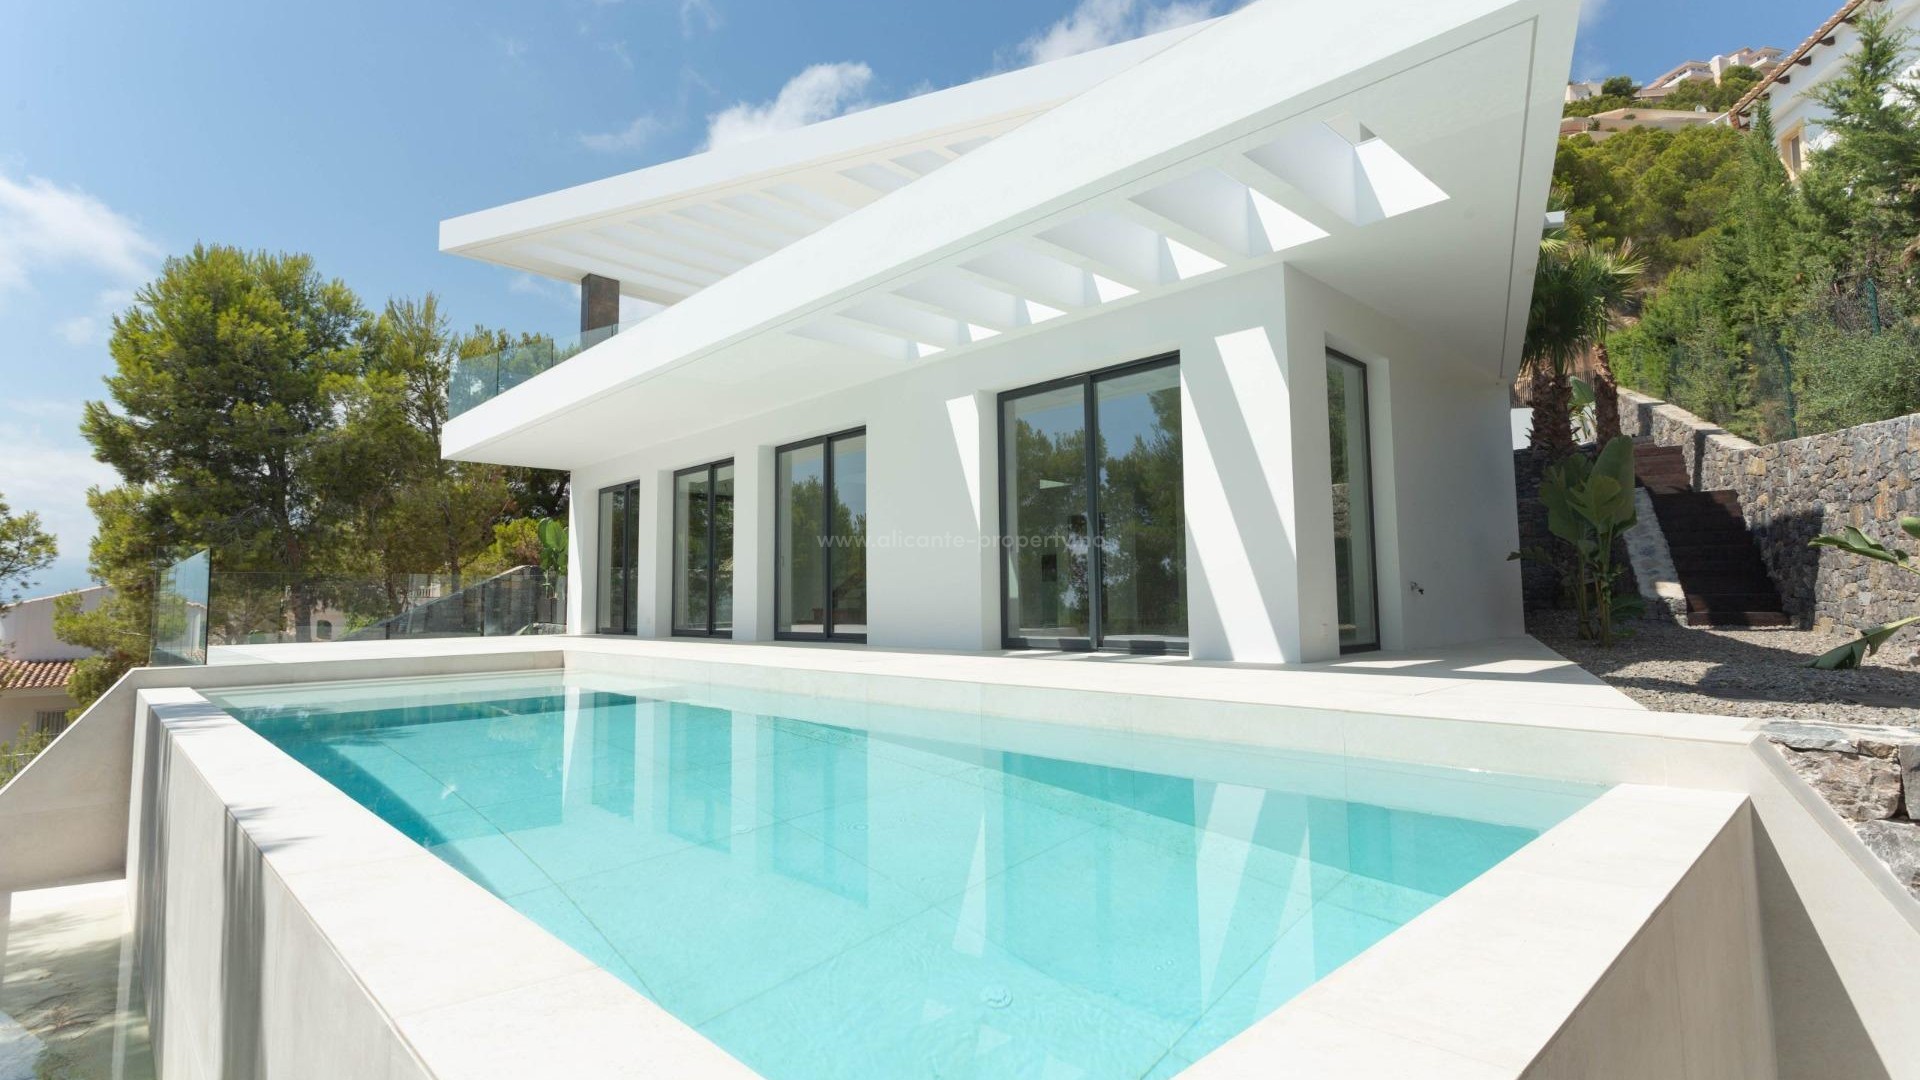 Luxury villa in Altea Hills, 4 bedrooms, 4 bathrooms, infinity pool, room for gym, sauna or billiards, the best view of the Mediterranean and Altea